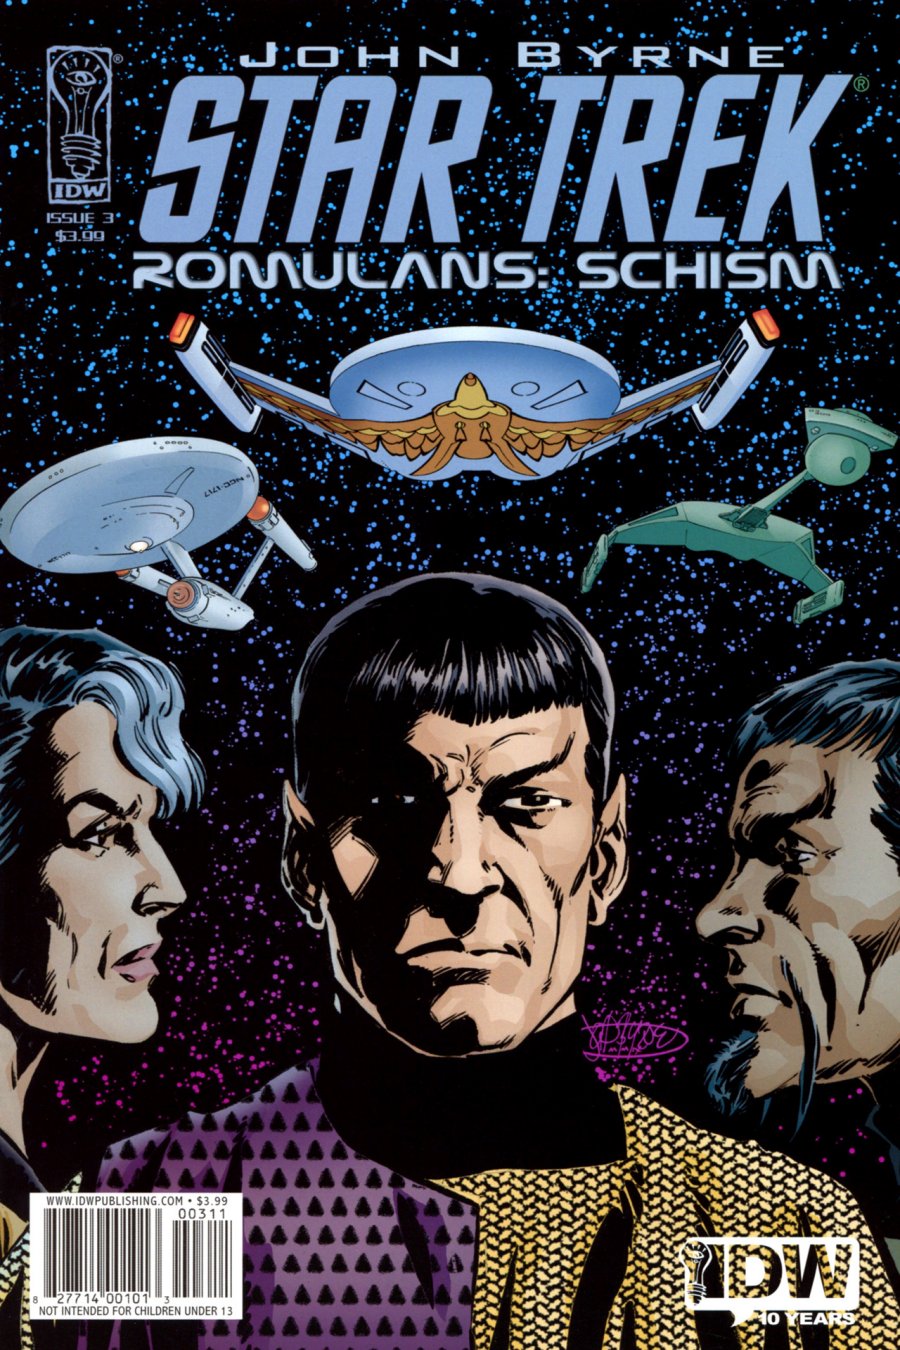 Romulans schism.